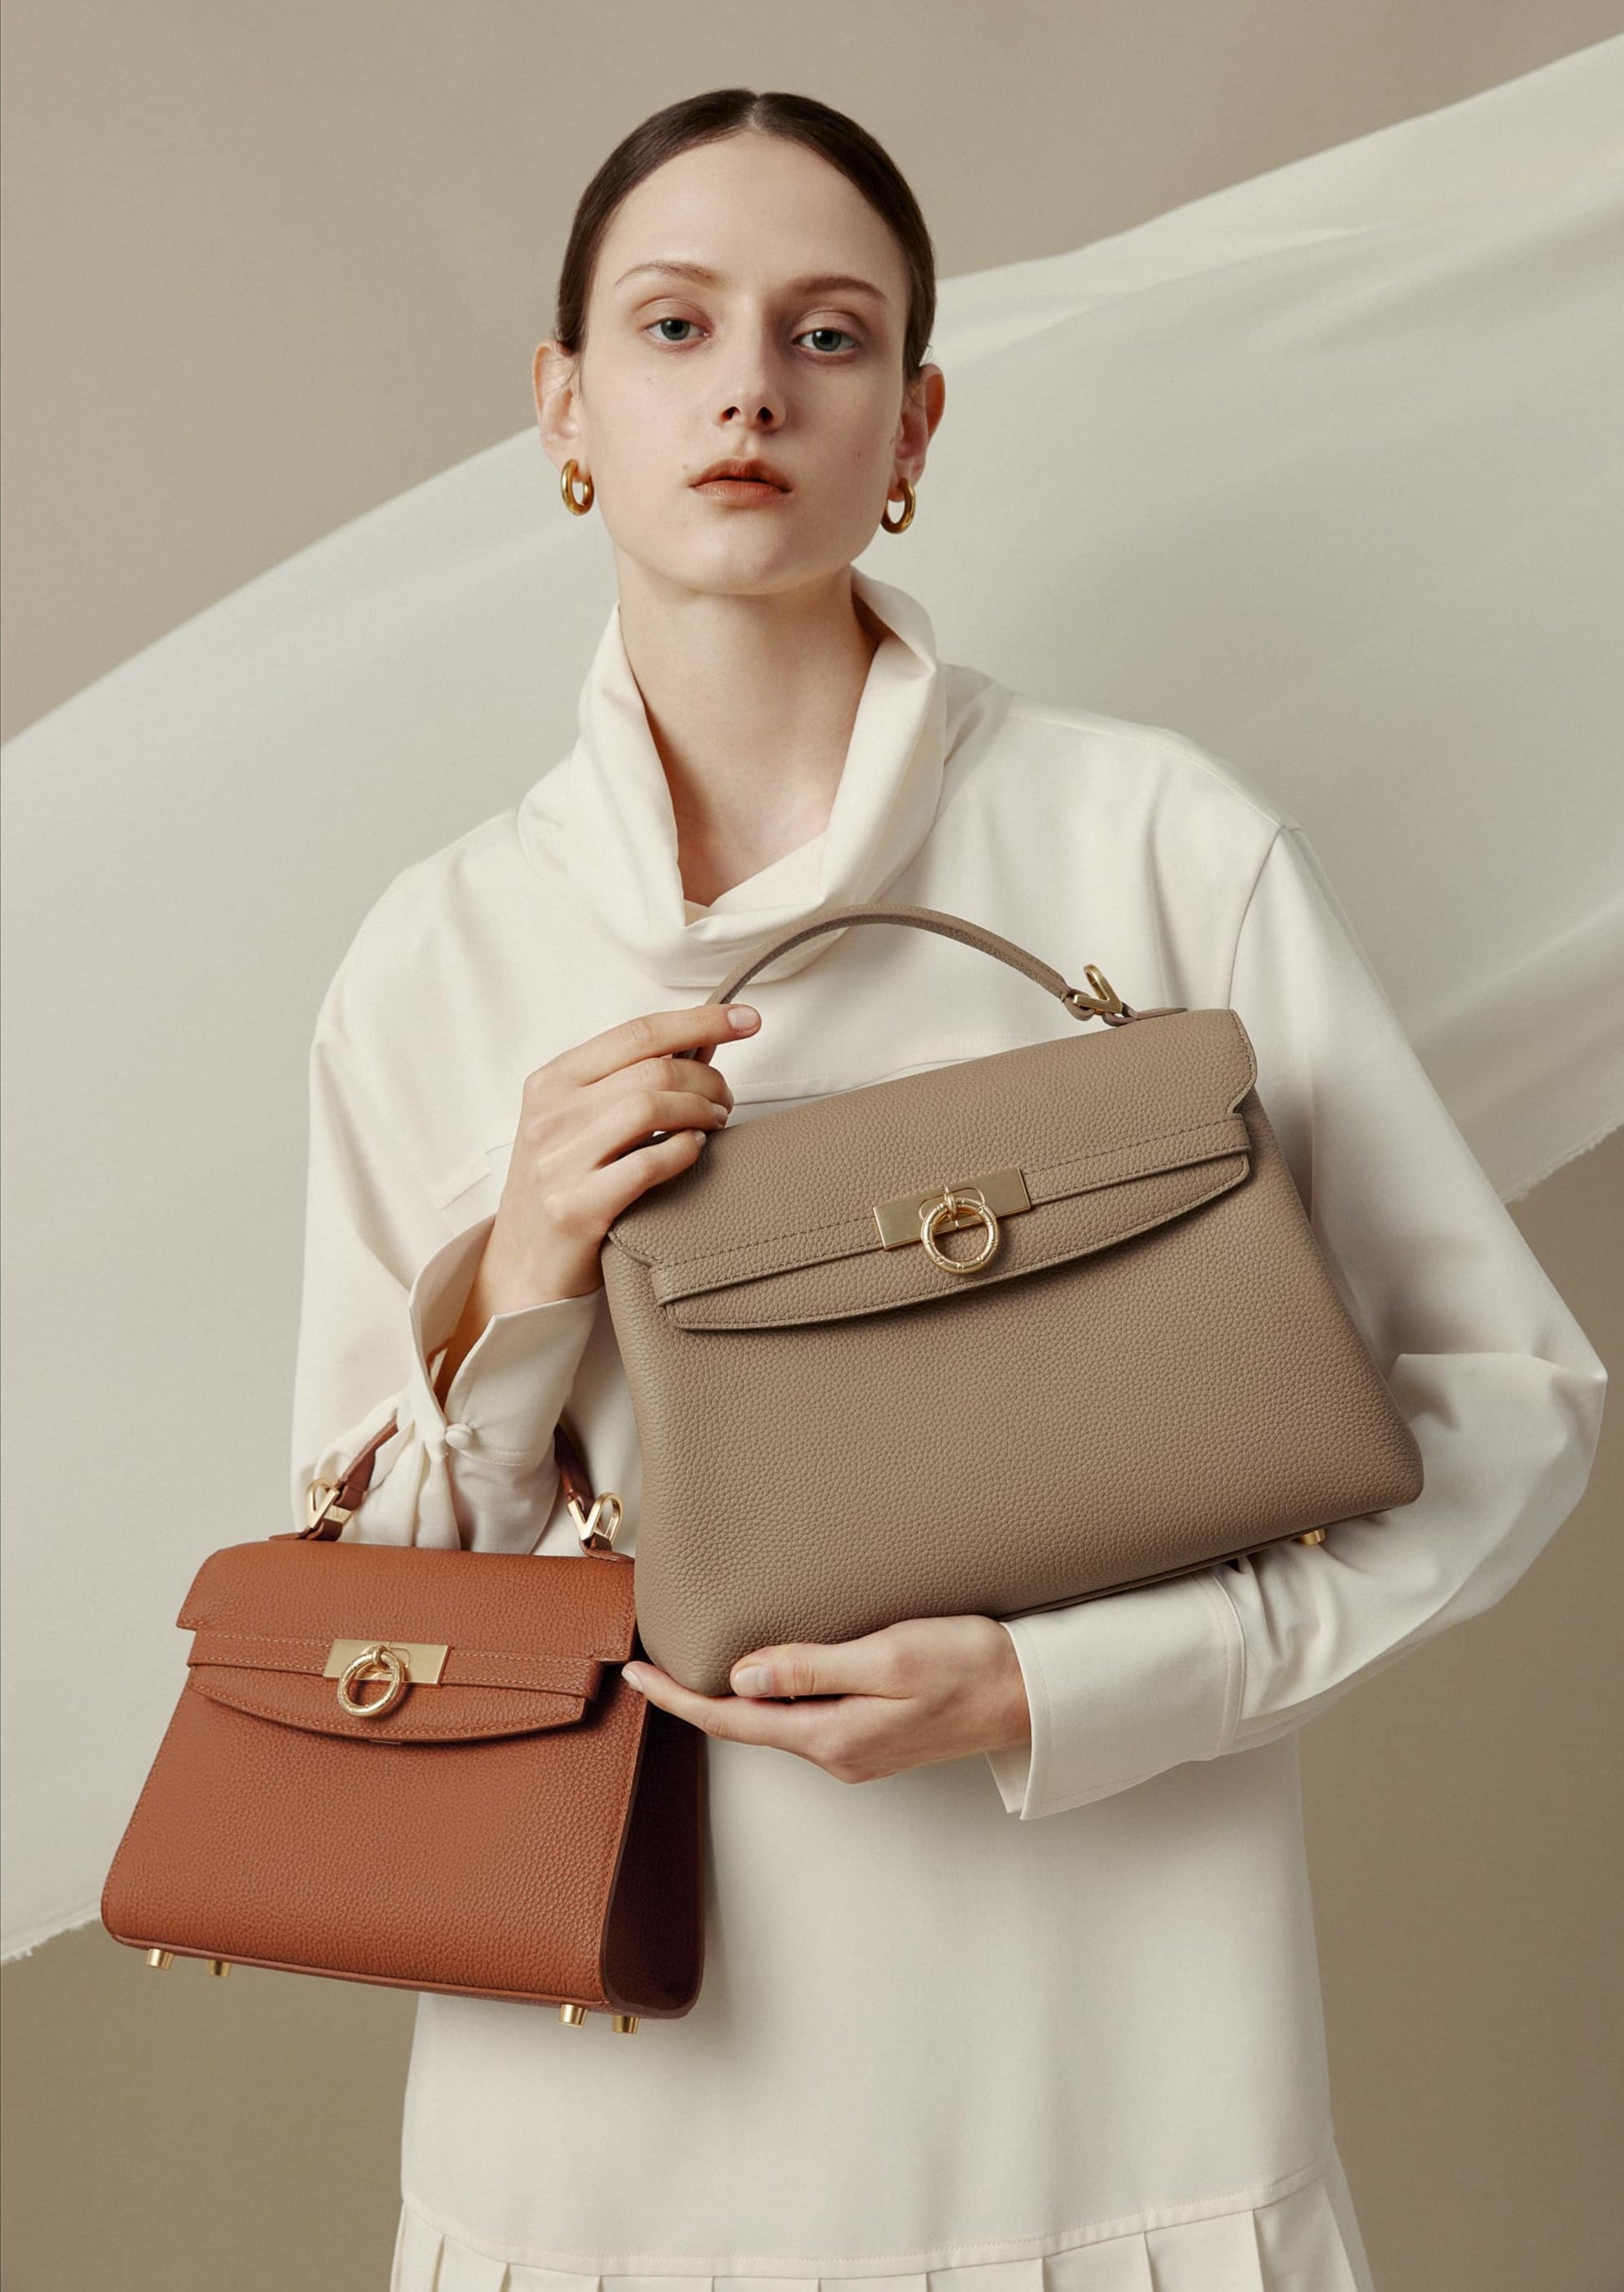 Top Grain Leather Inspired Birkin Handbag